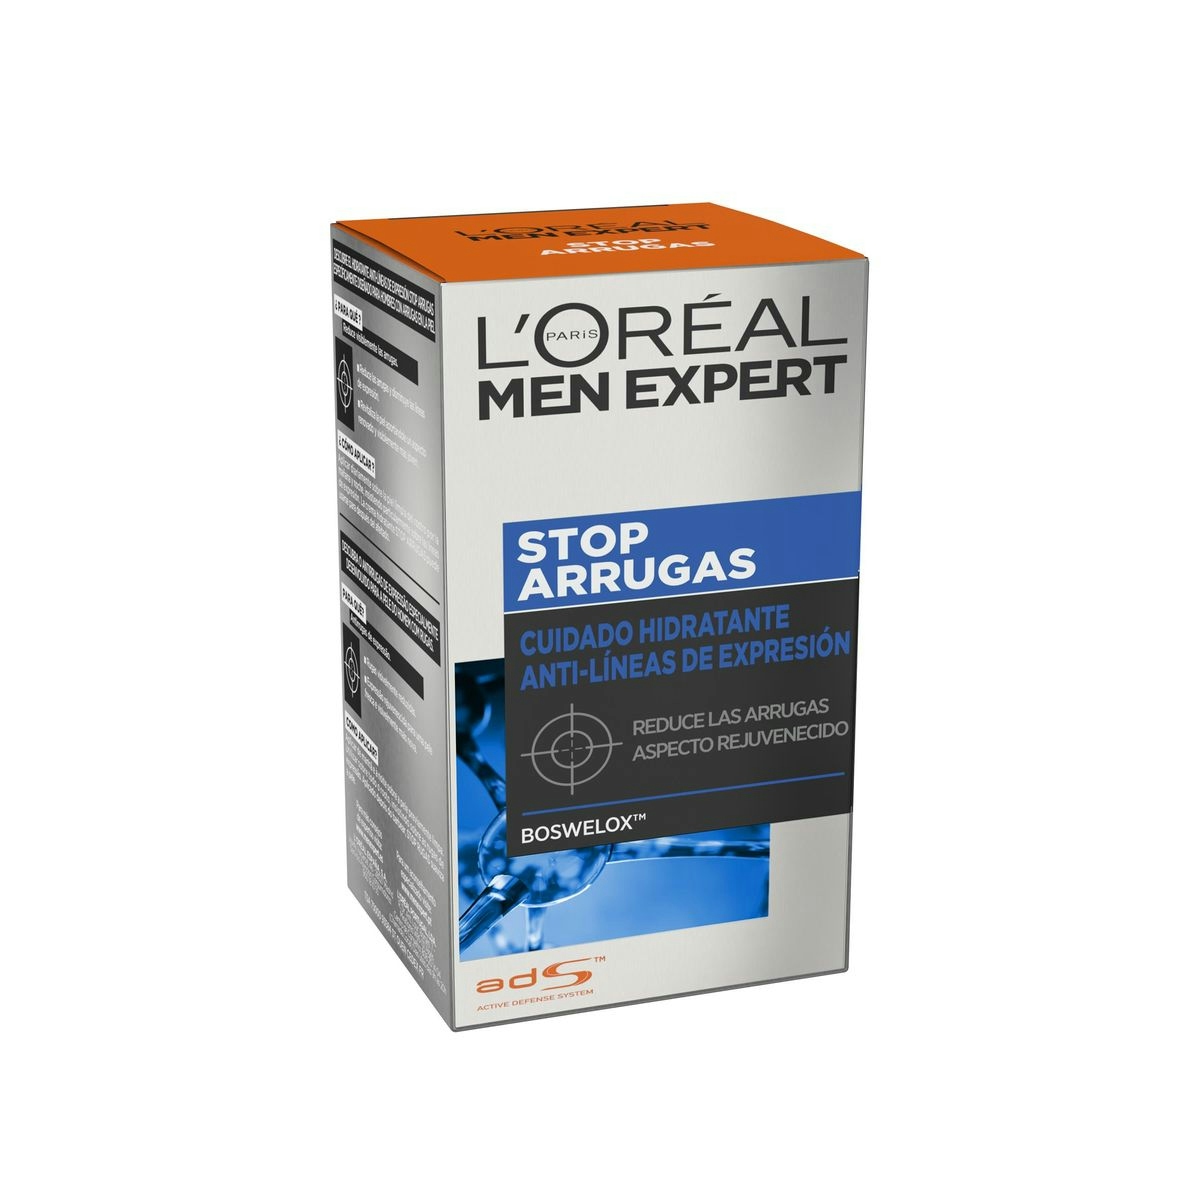 Stop-Arrugas Cuidado Hidratante Anti-Líneas de Expresión para hombres L'Oréal Men Expert 50 ml